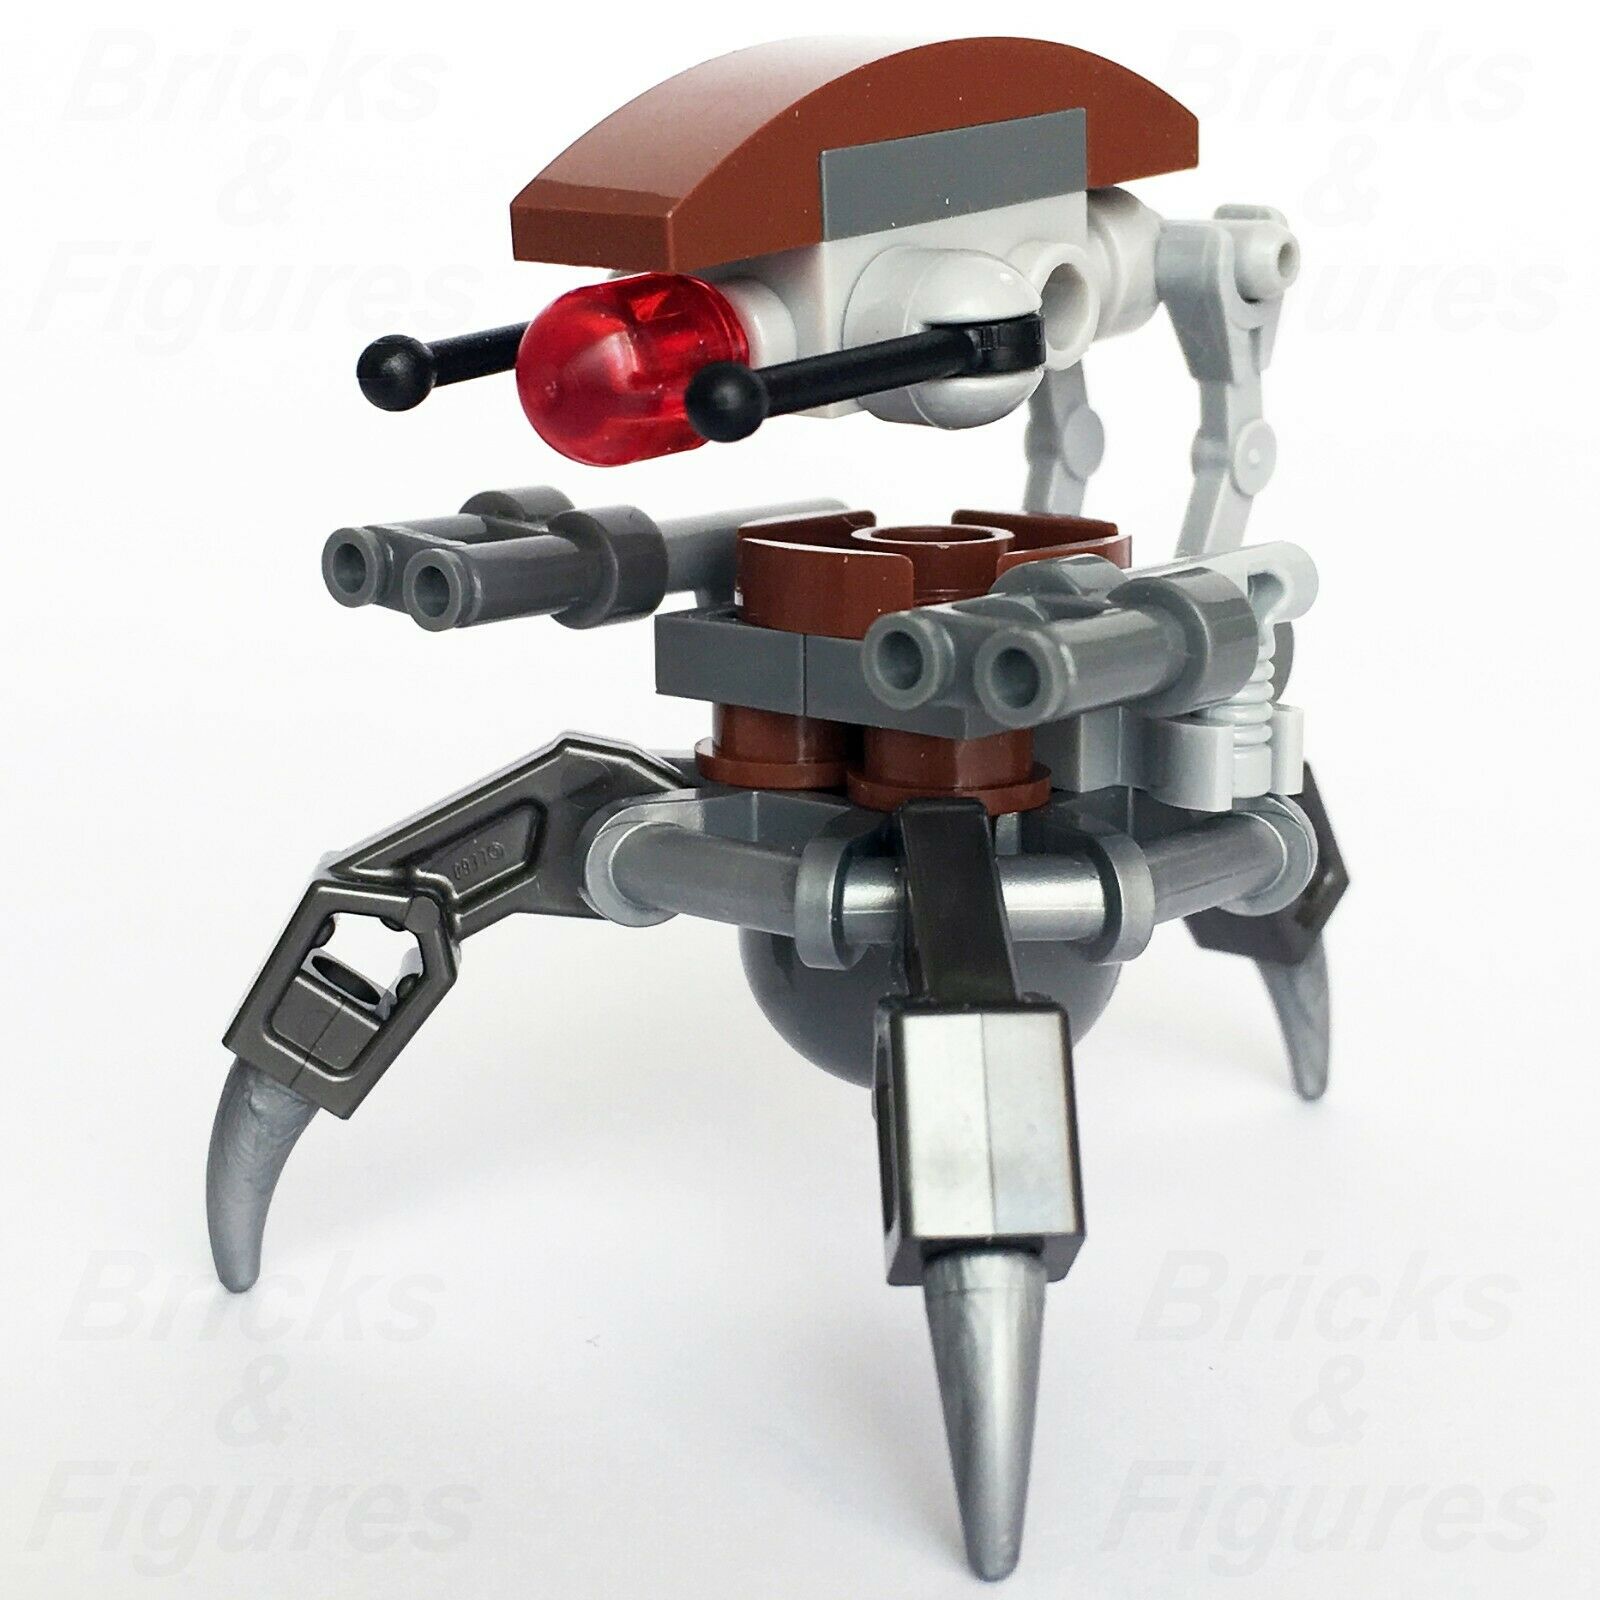 Star Wars LEGO Droideka Separatist Droid Clone Wars Minifigure 75000 - Bricks & Figures